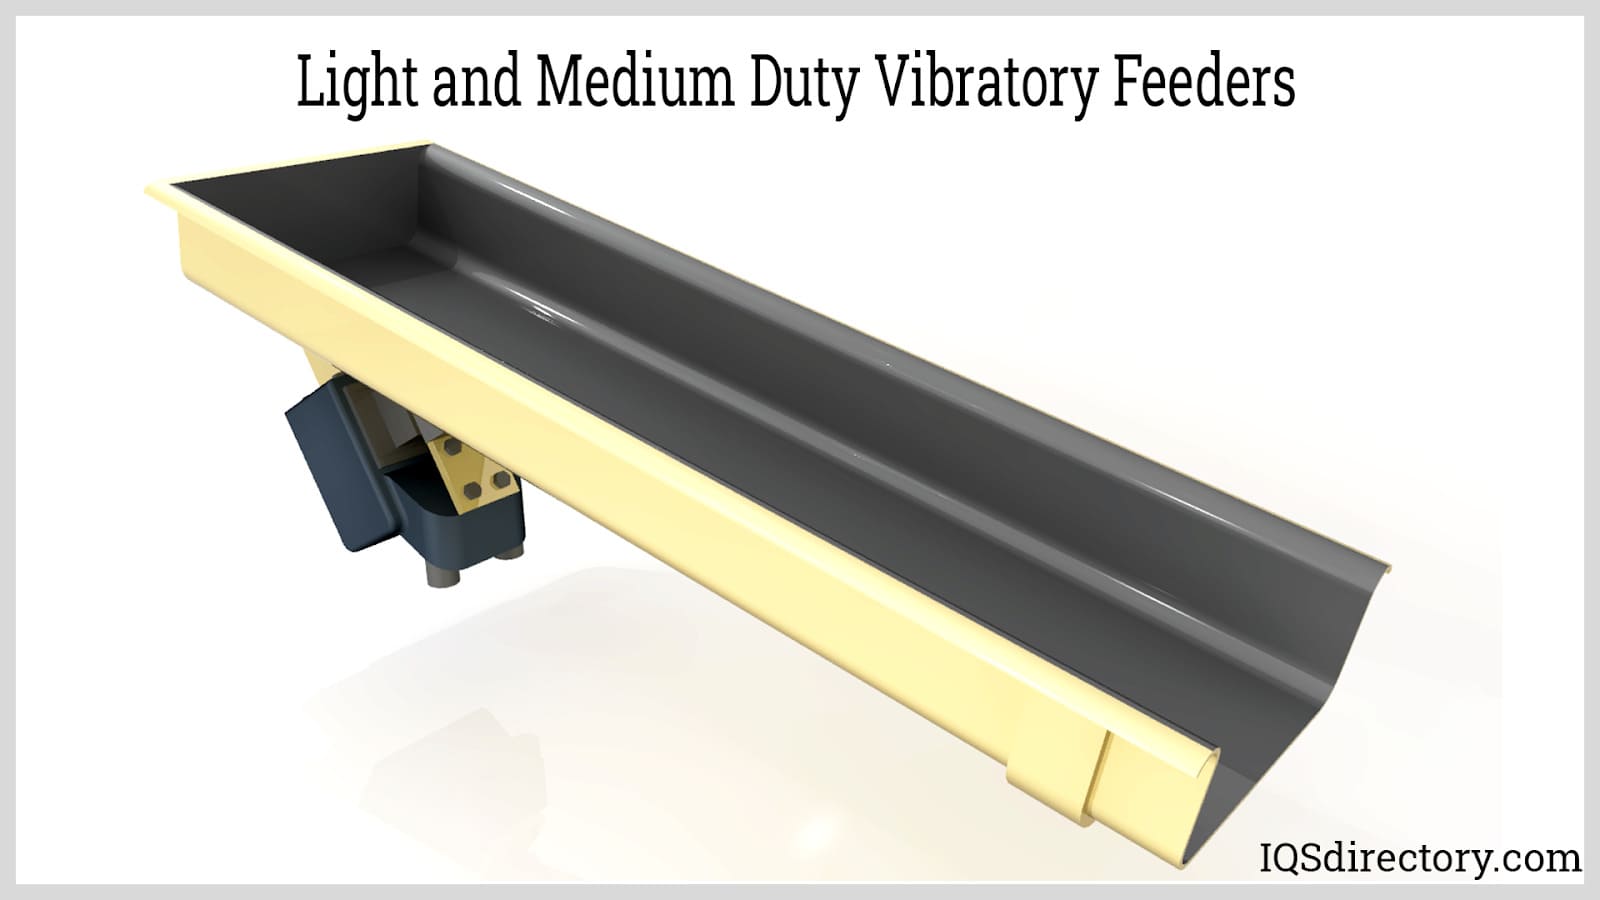 Light and Medium Duty Vibratory Feeders